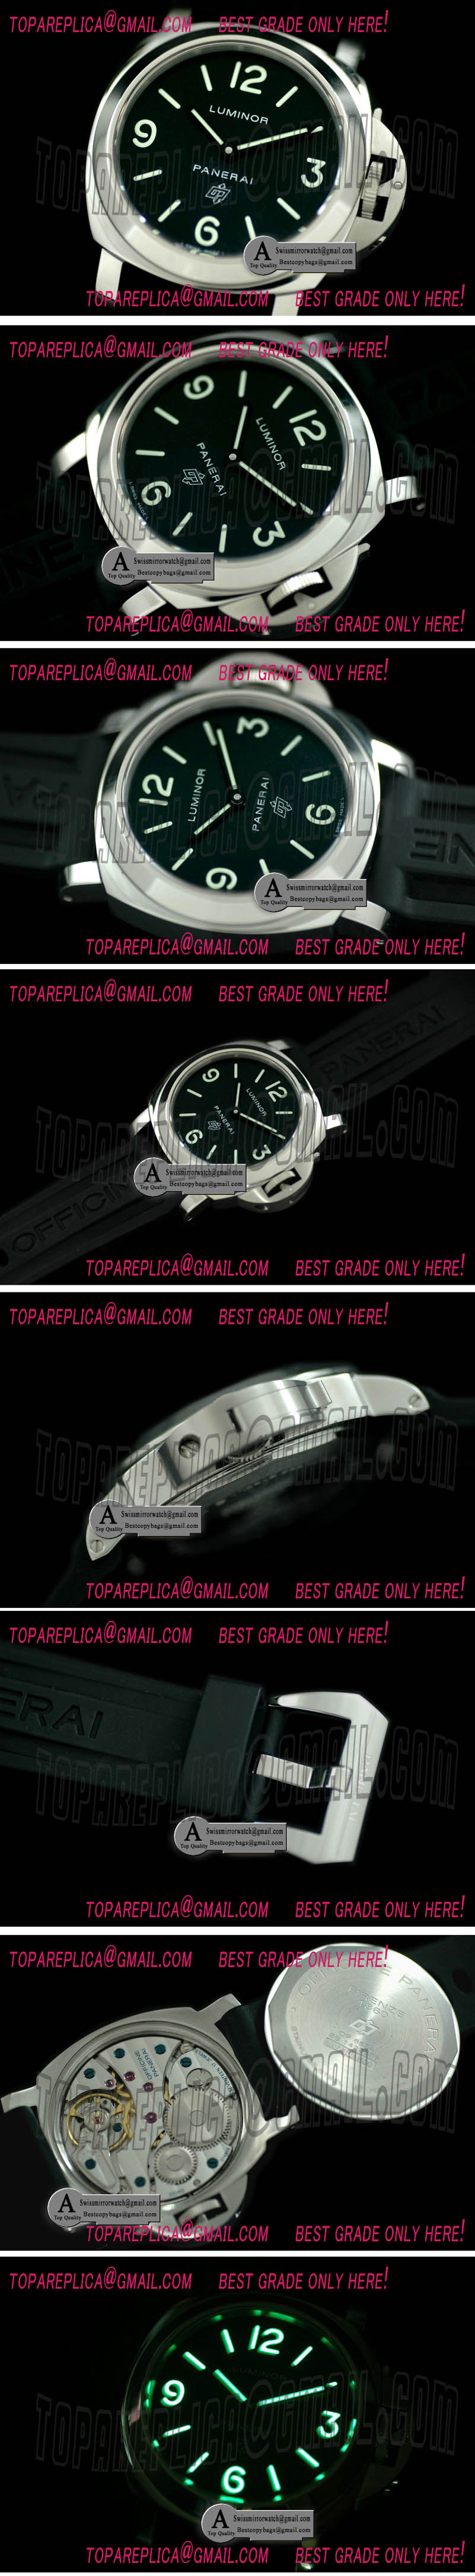 Officine Panerai Pam 000 N NV SS/Rubber Black Dial A-6497 Replica Watches